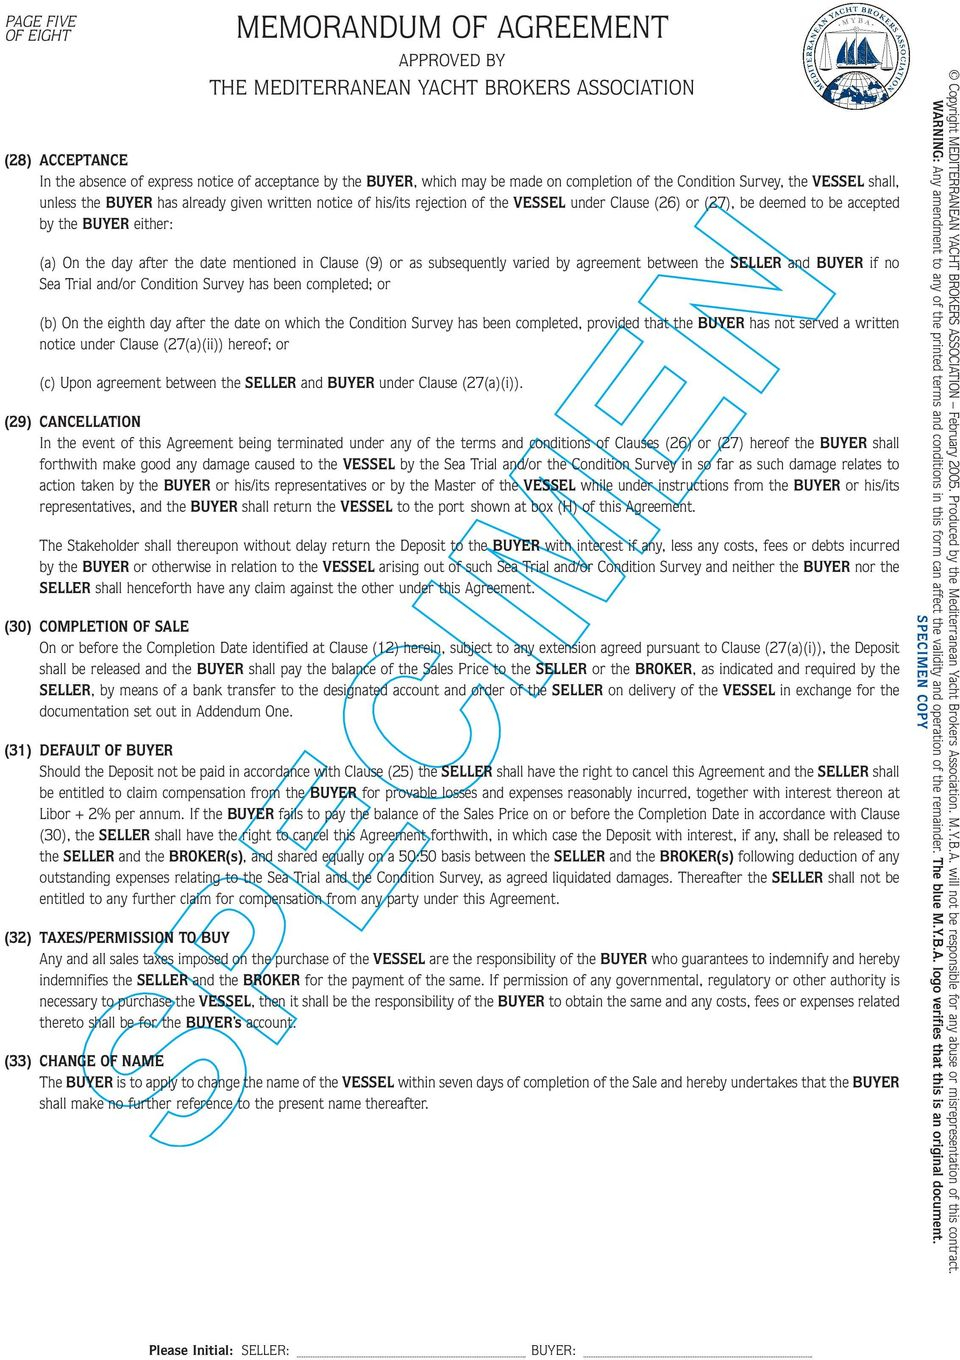 Sample Contract Agreement Between Buyer And Seller Memorandum Of Agreement Pdf